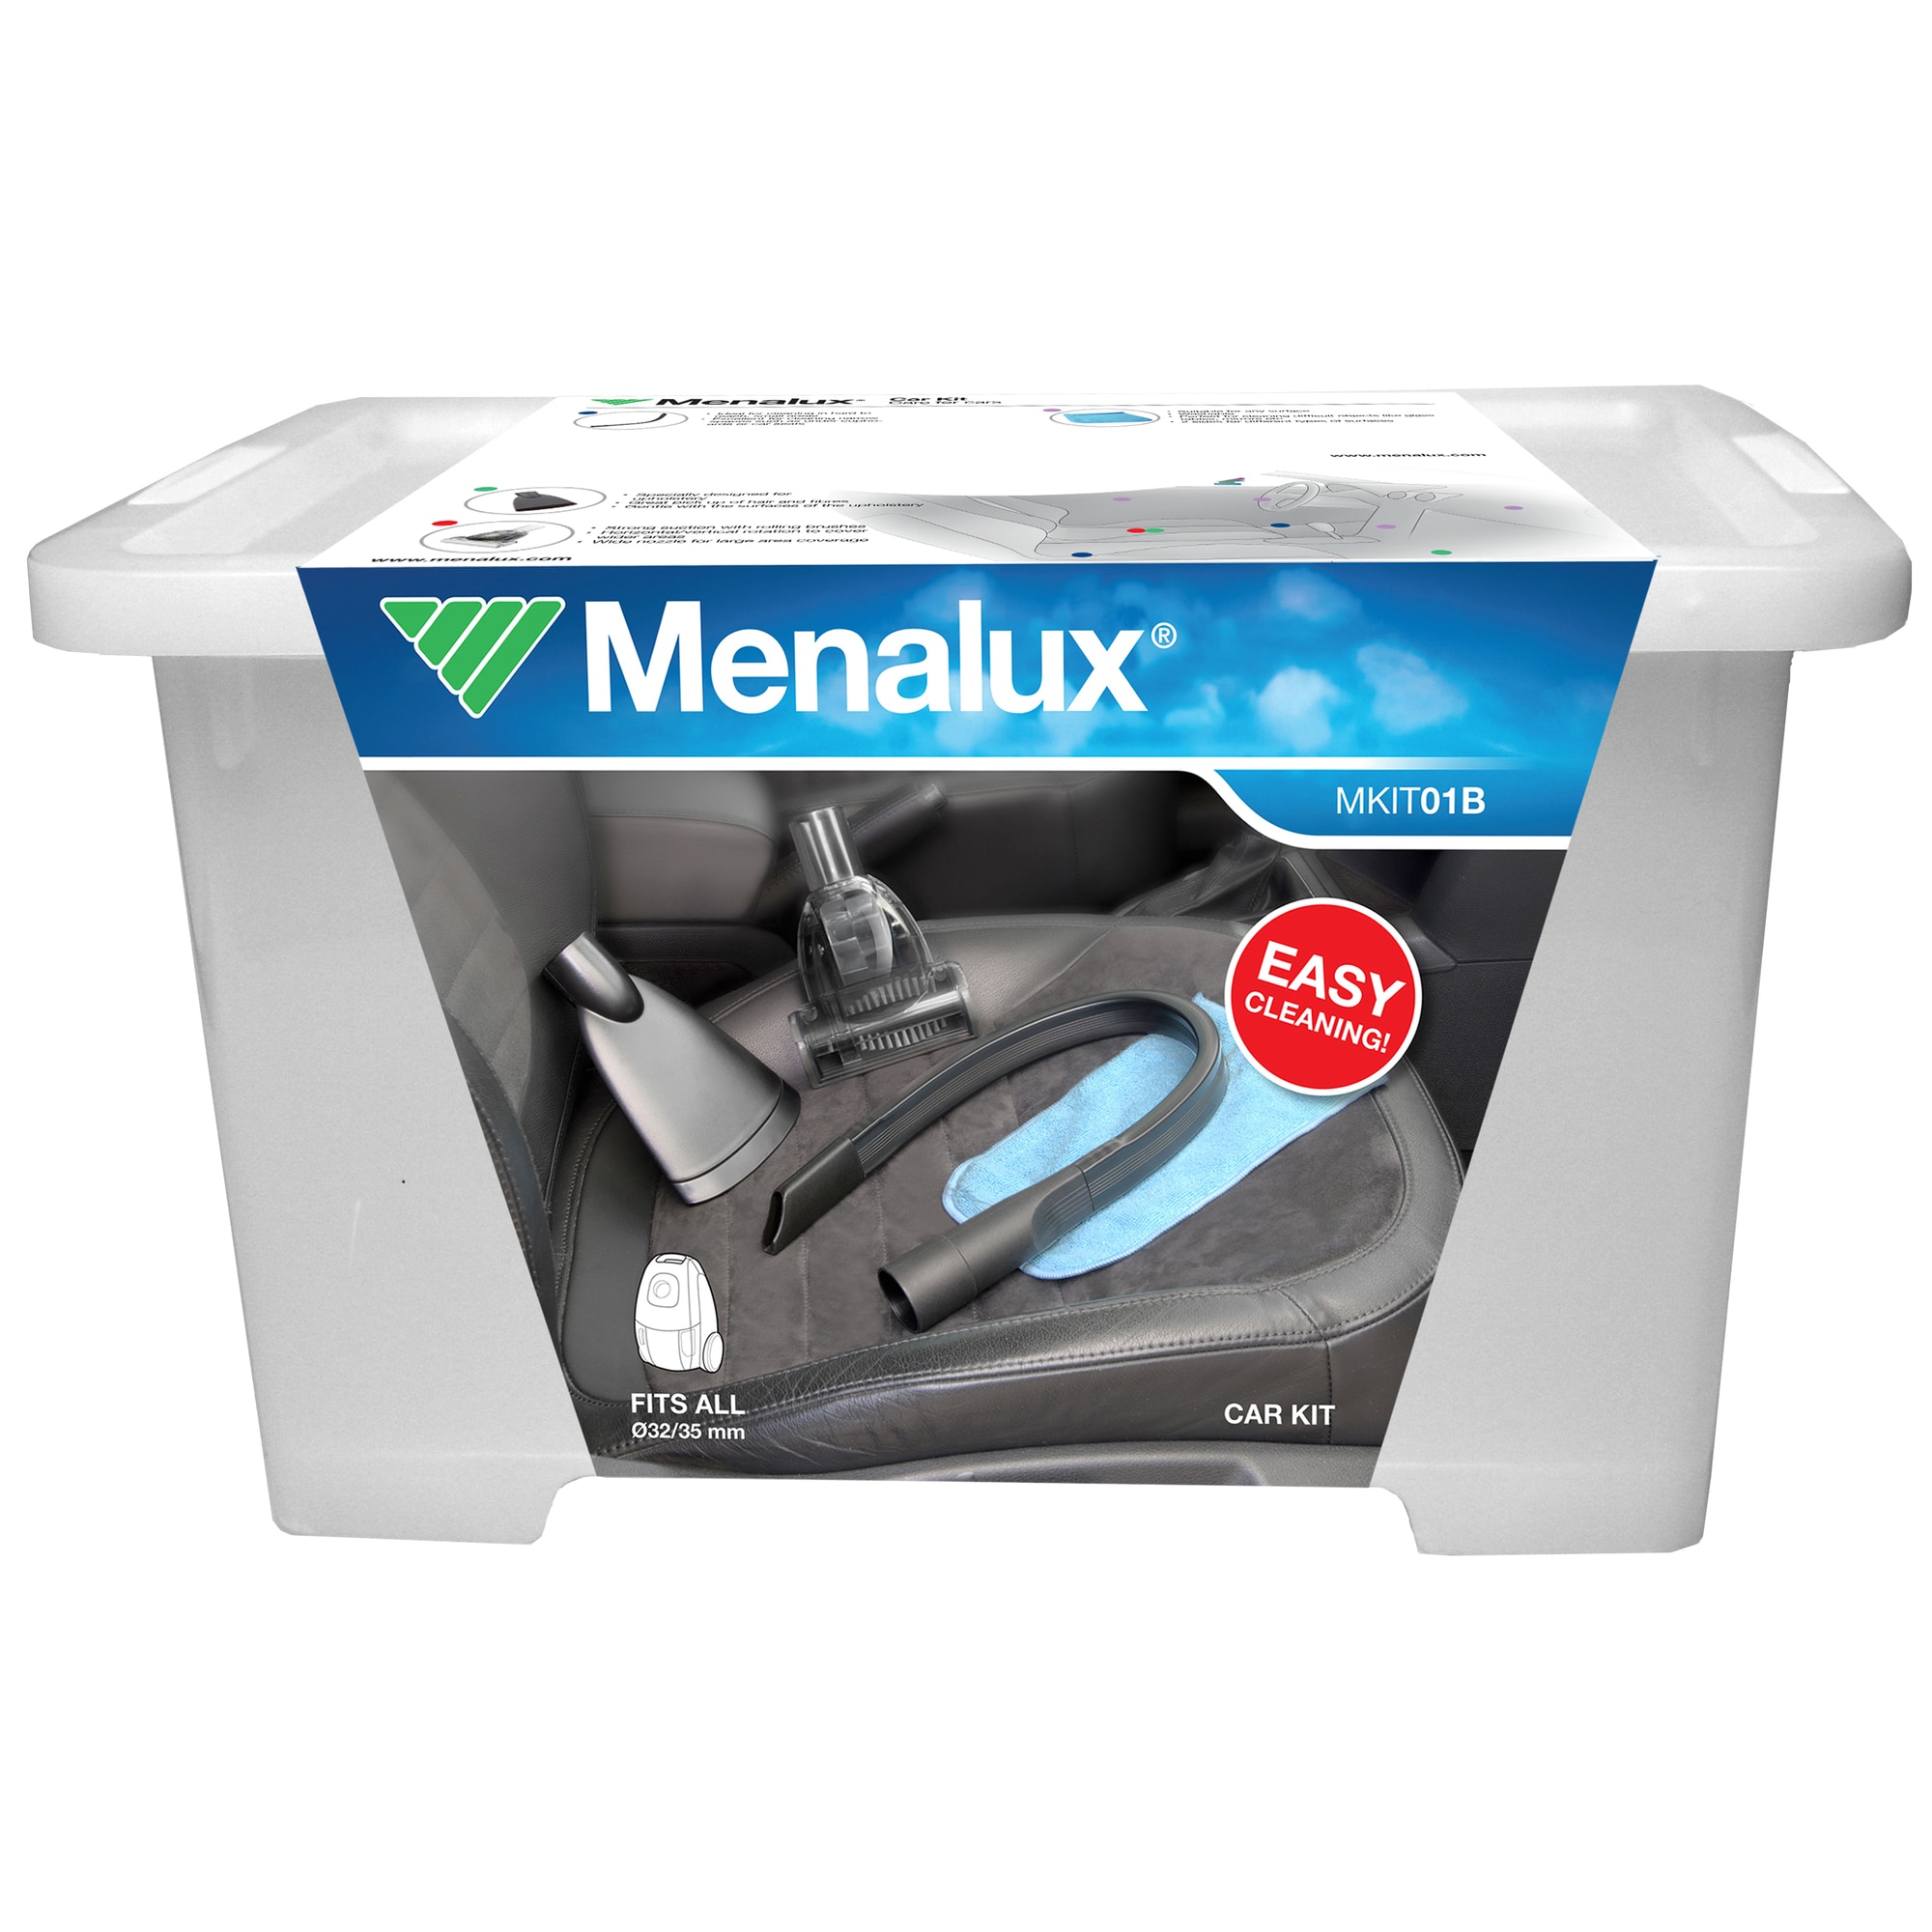 Menalux Auto Care støvsugersæt til bil thumbnail